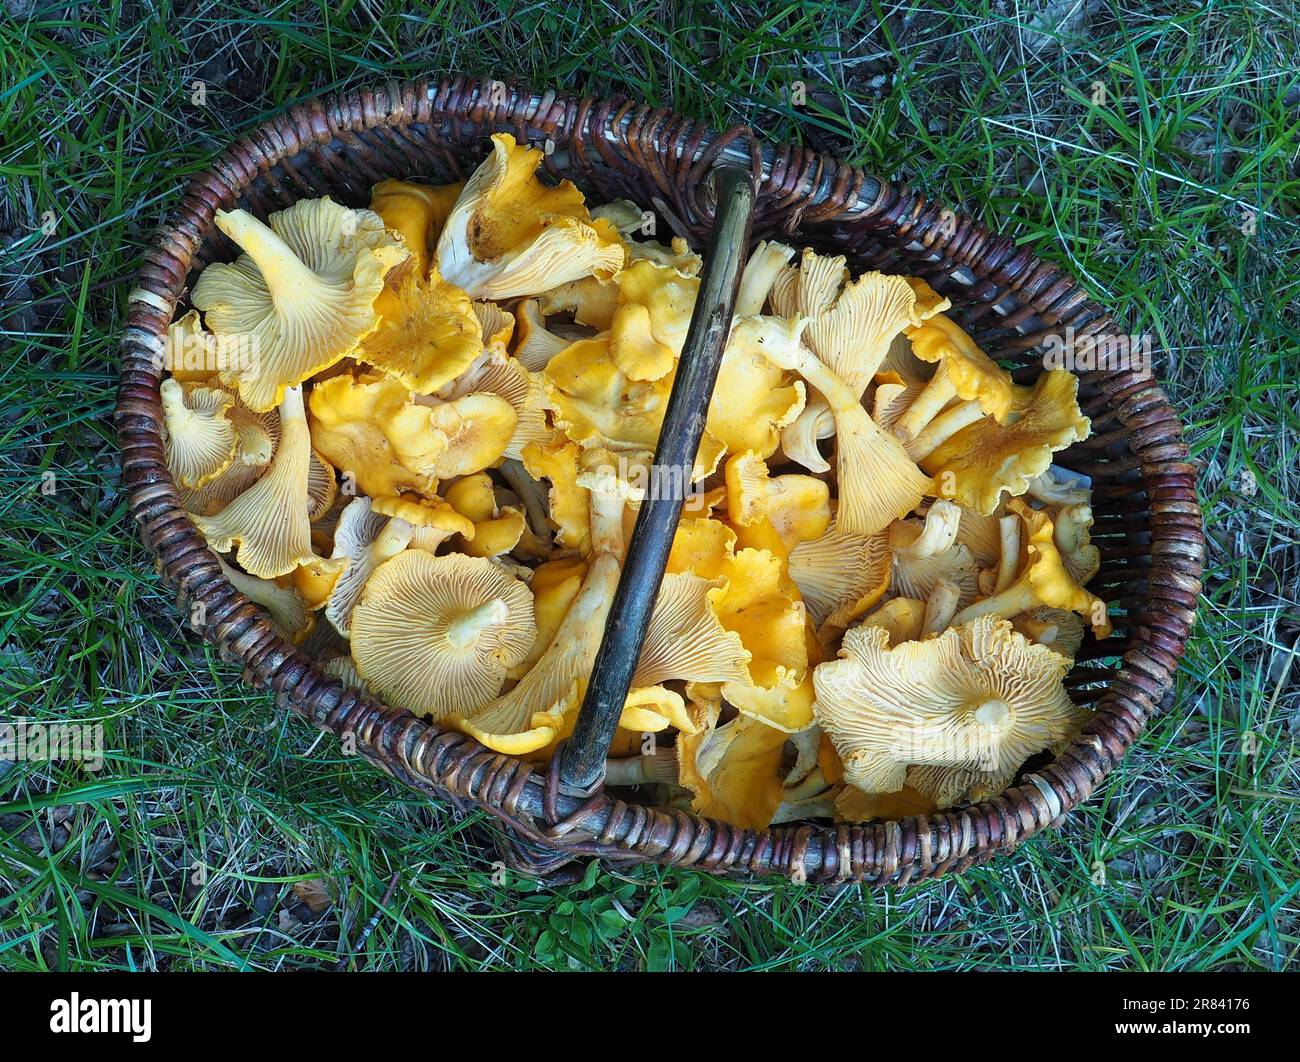 Mushroom basket with chanterelles Stock Photo